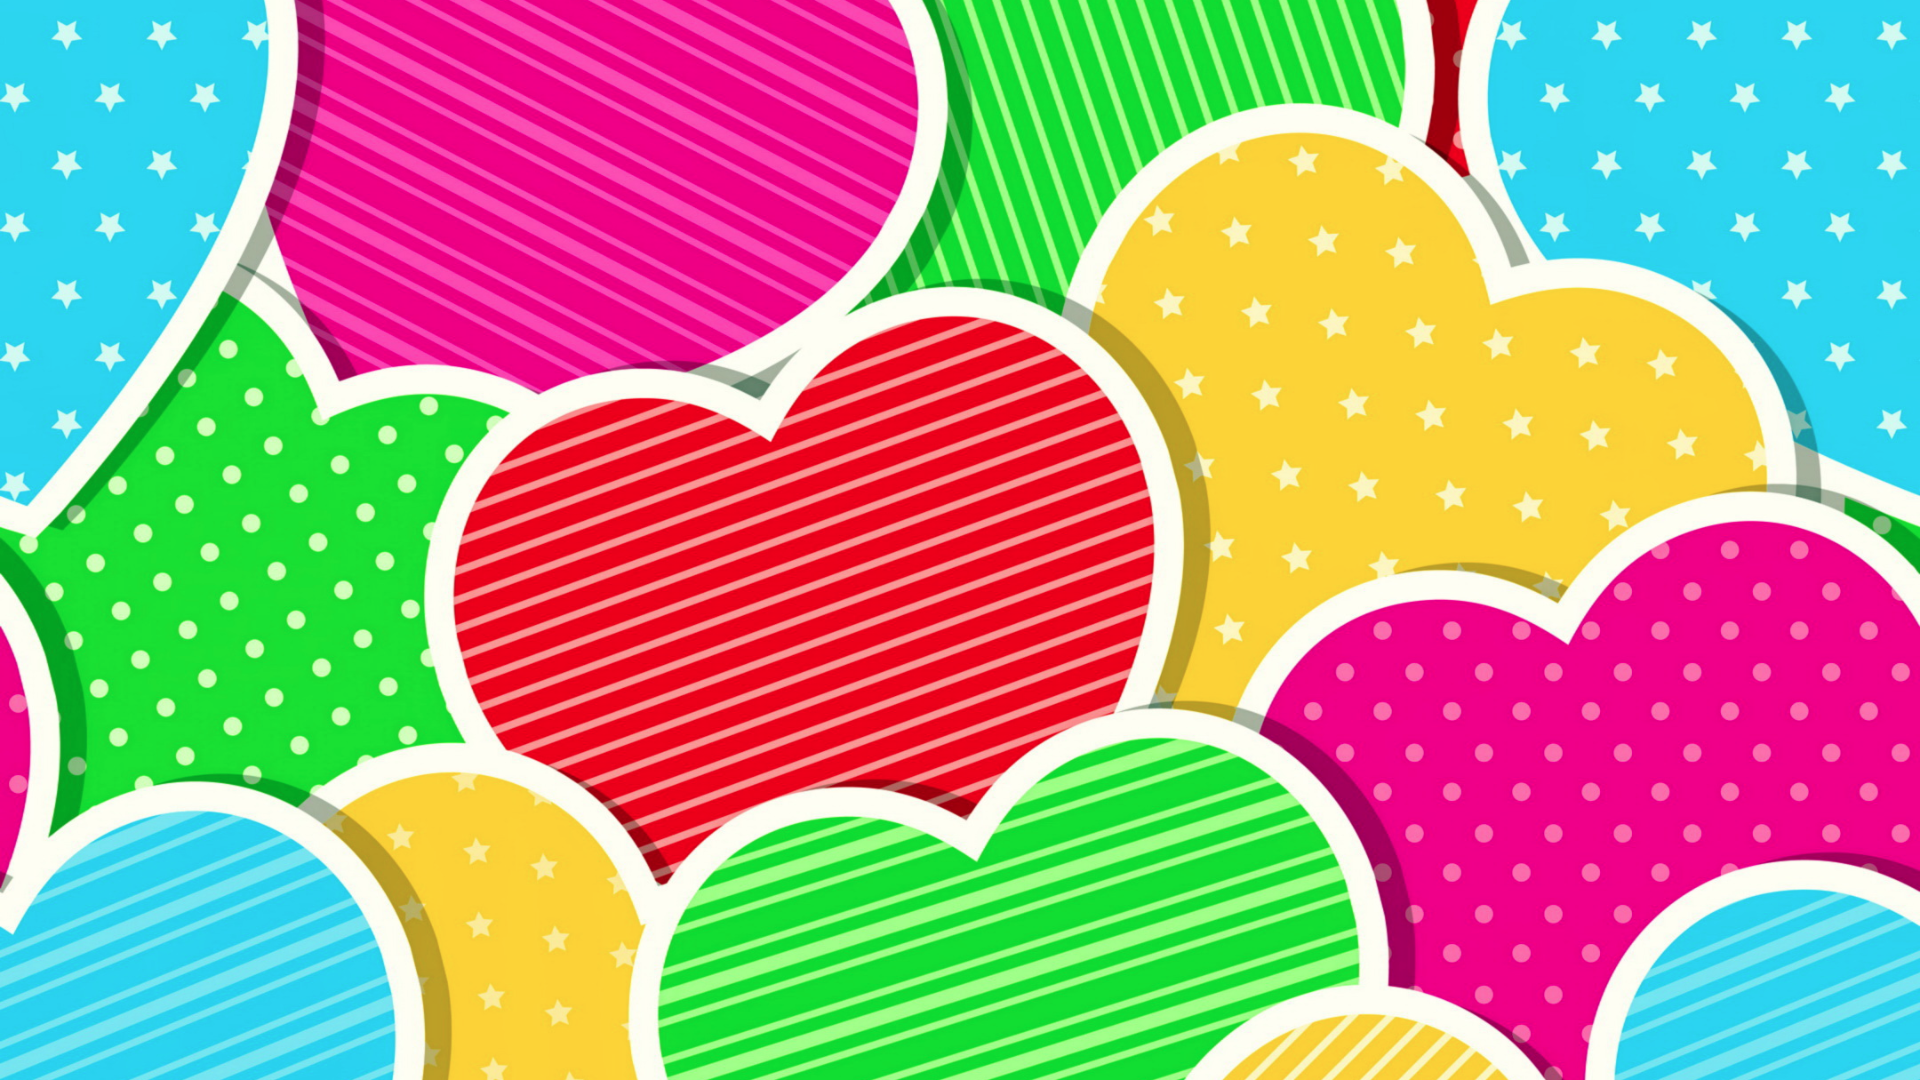 Colorful Hearts Nexus 5 Wallpaper (1920x1080)